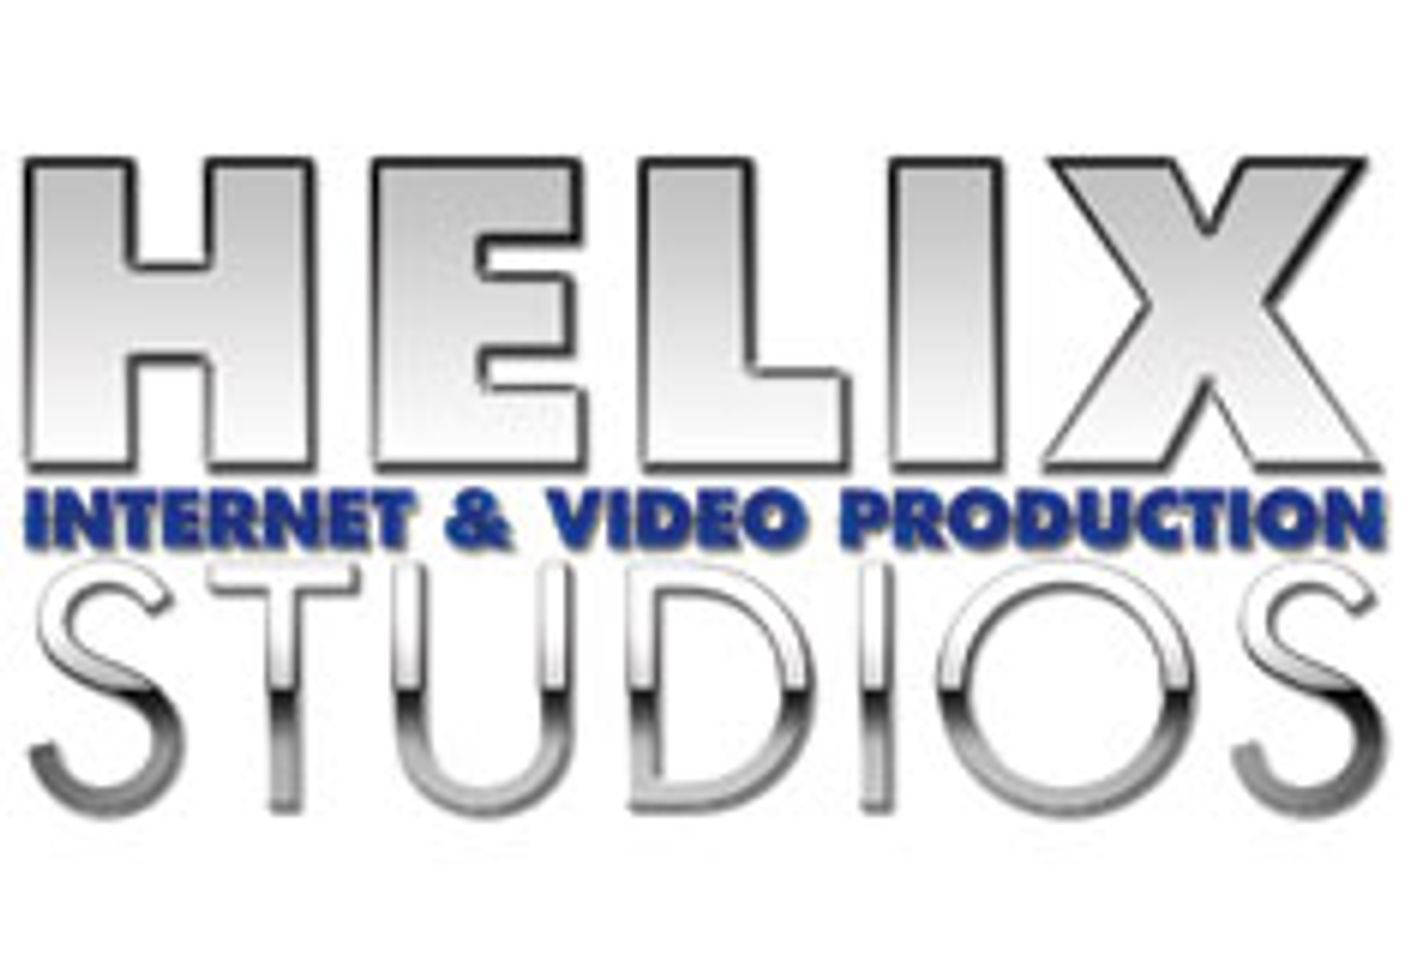 Company Profile: Helix Studios